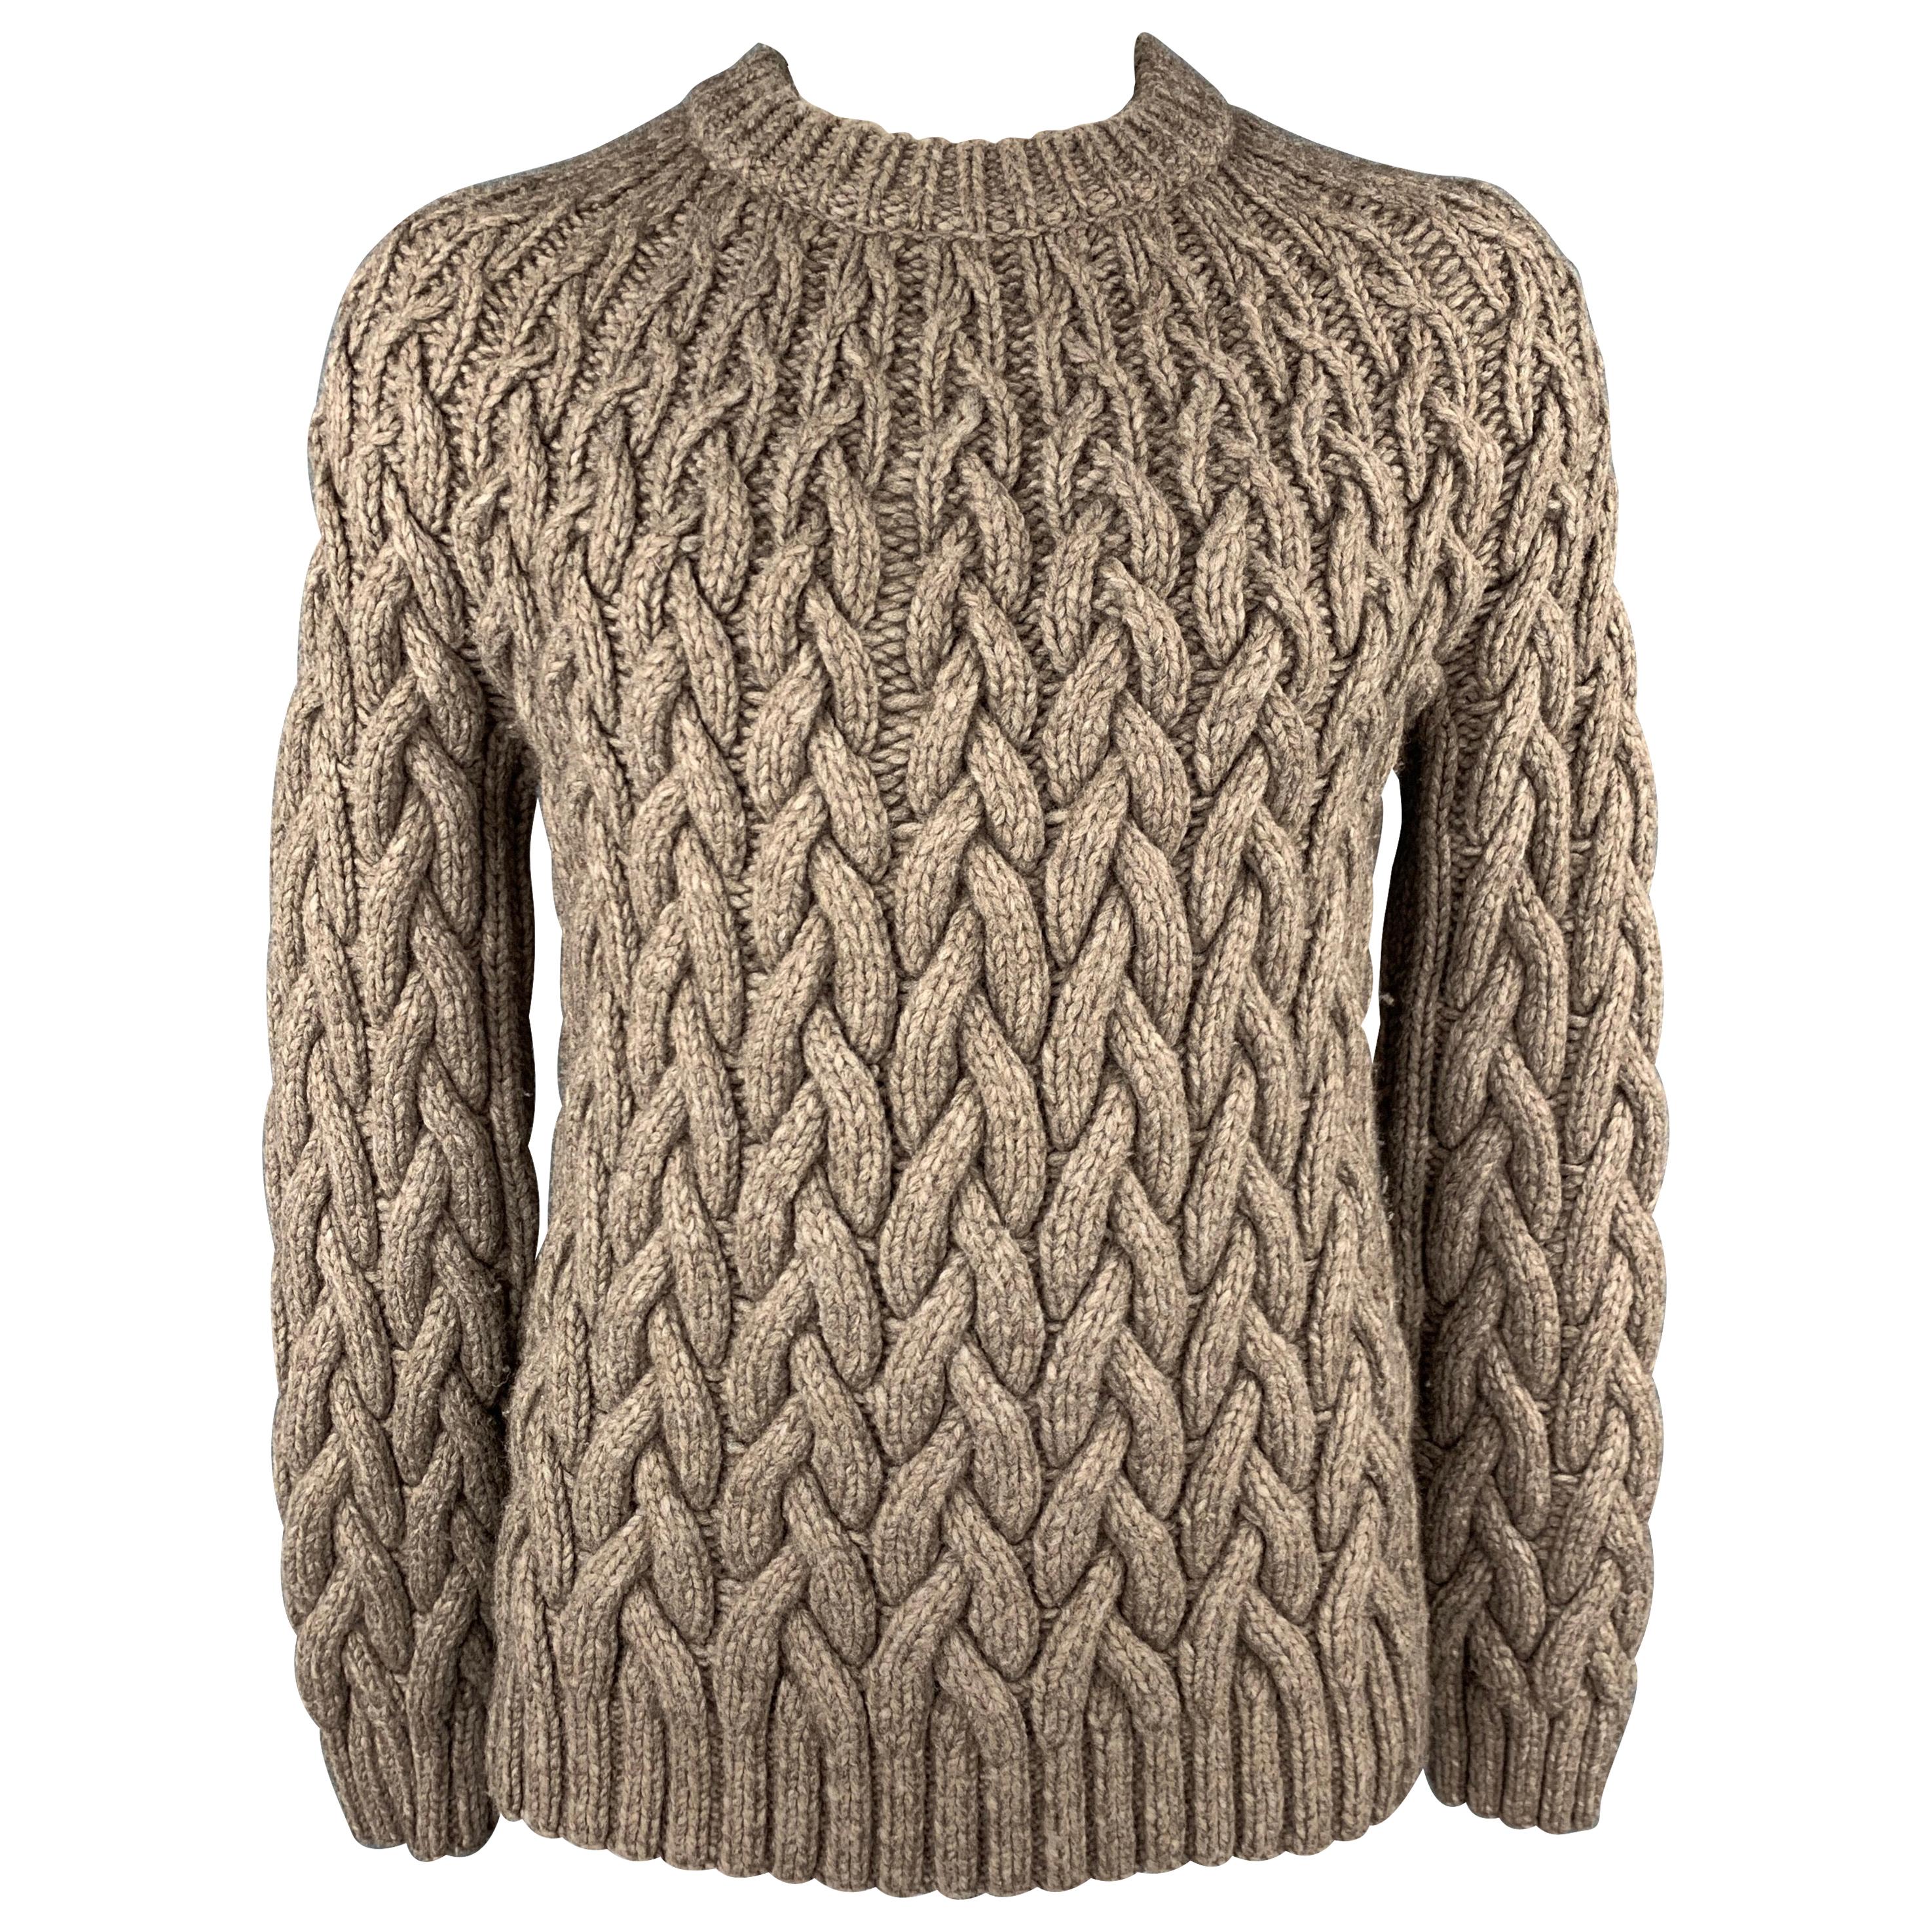 Tan Michael Kors Fox Fur-Trimmed Cashmere Sweater Jacket at